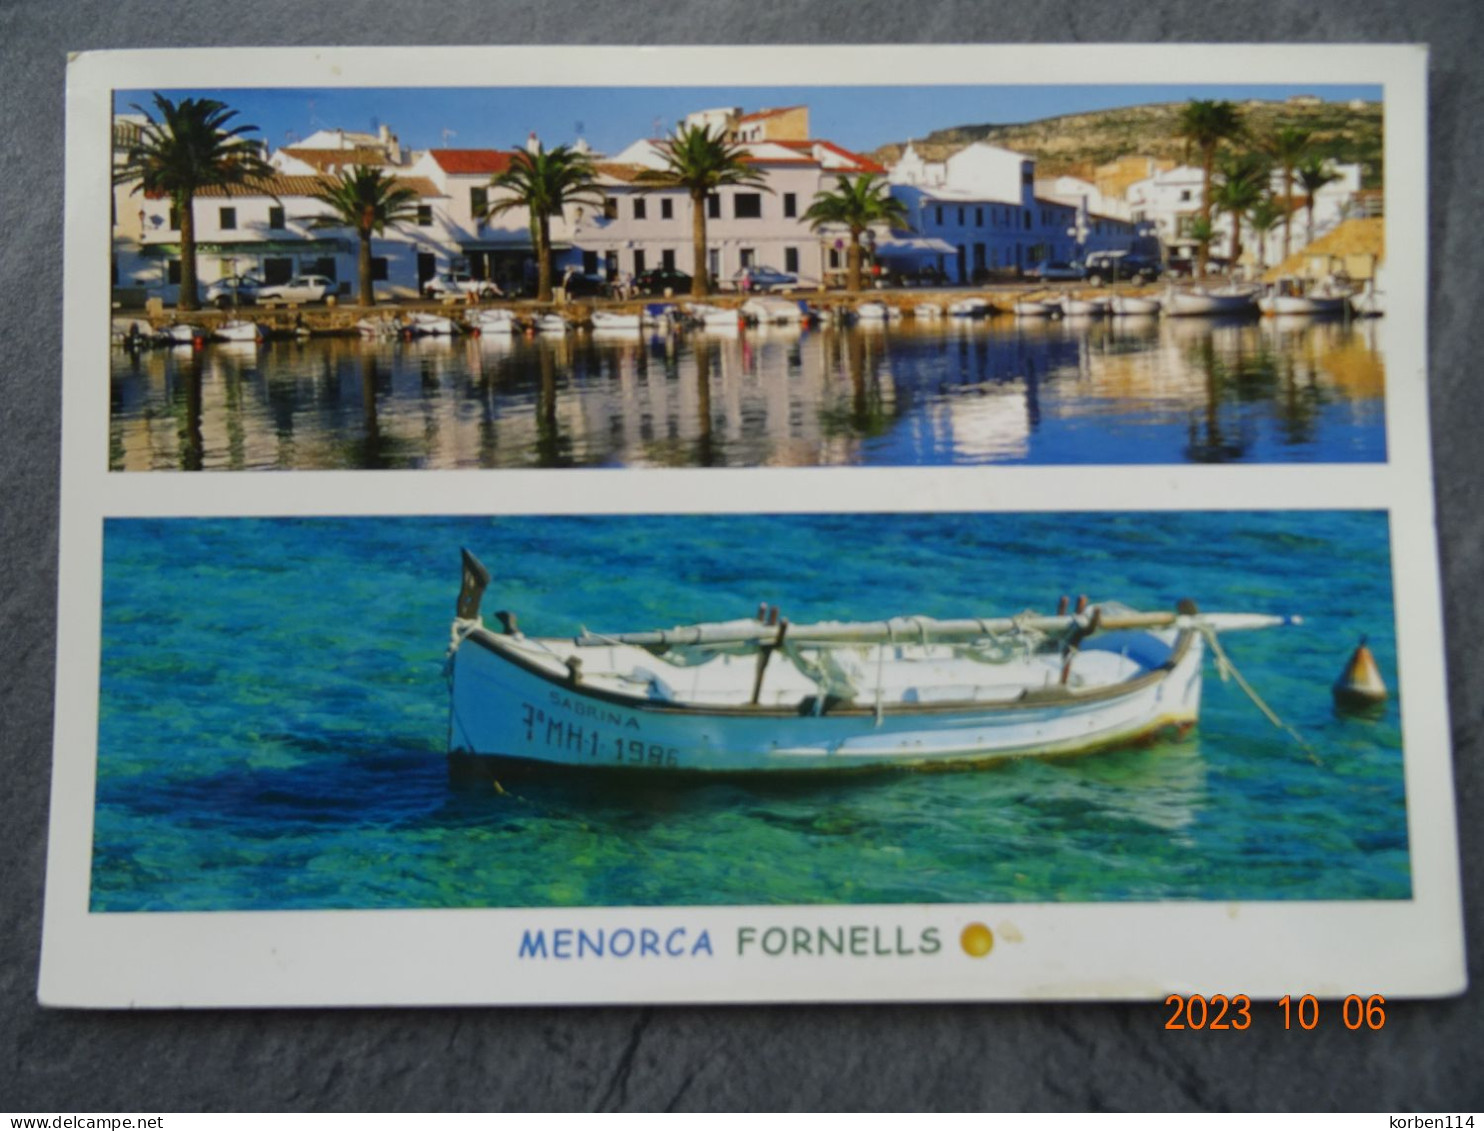 FORNELLS - Menorca